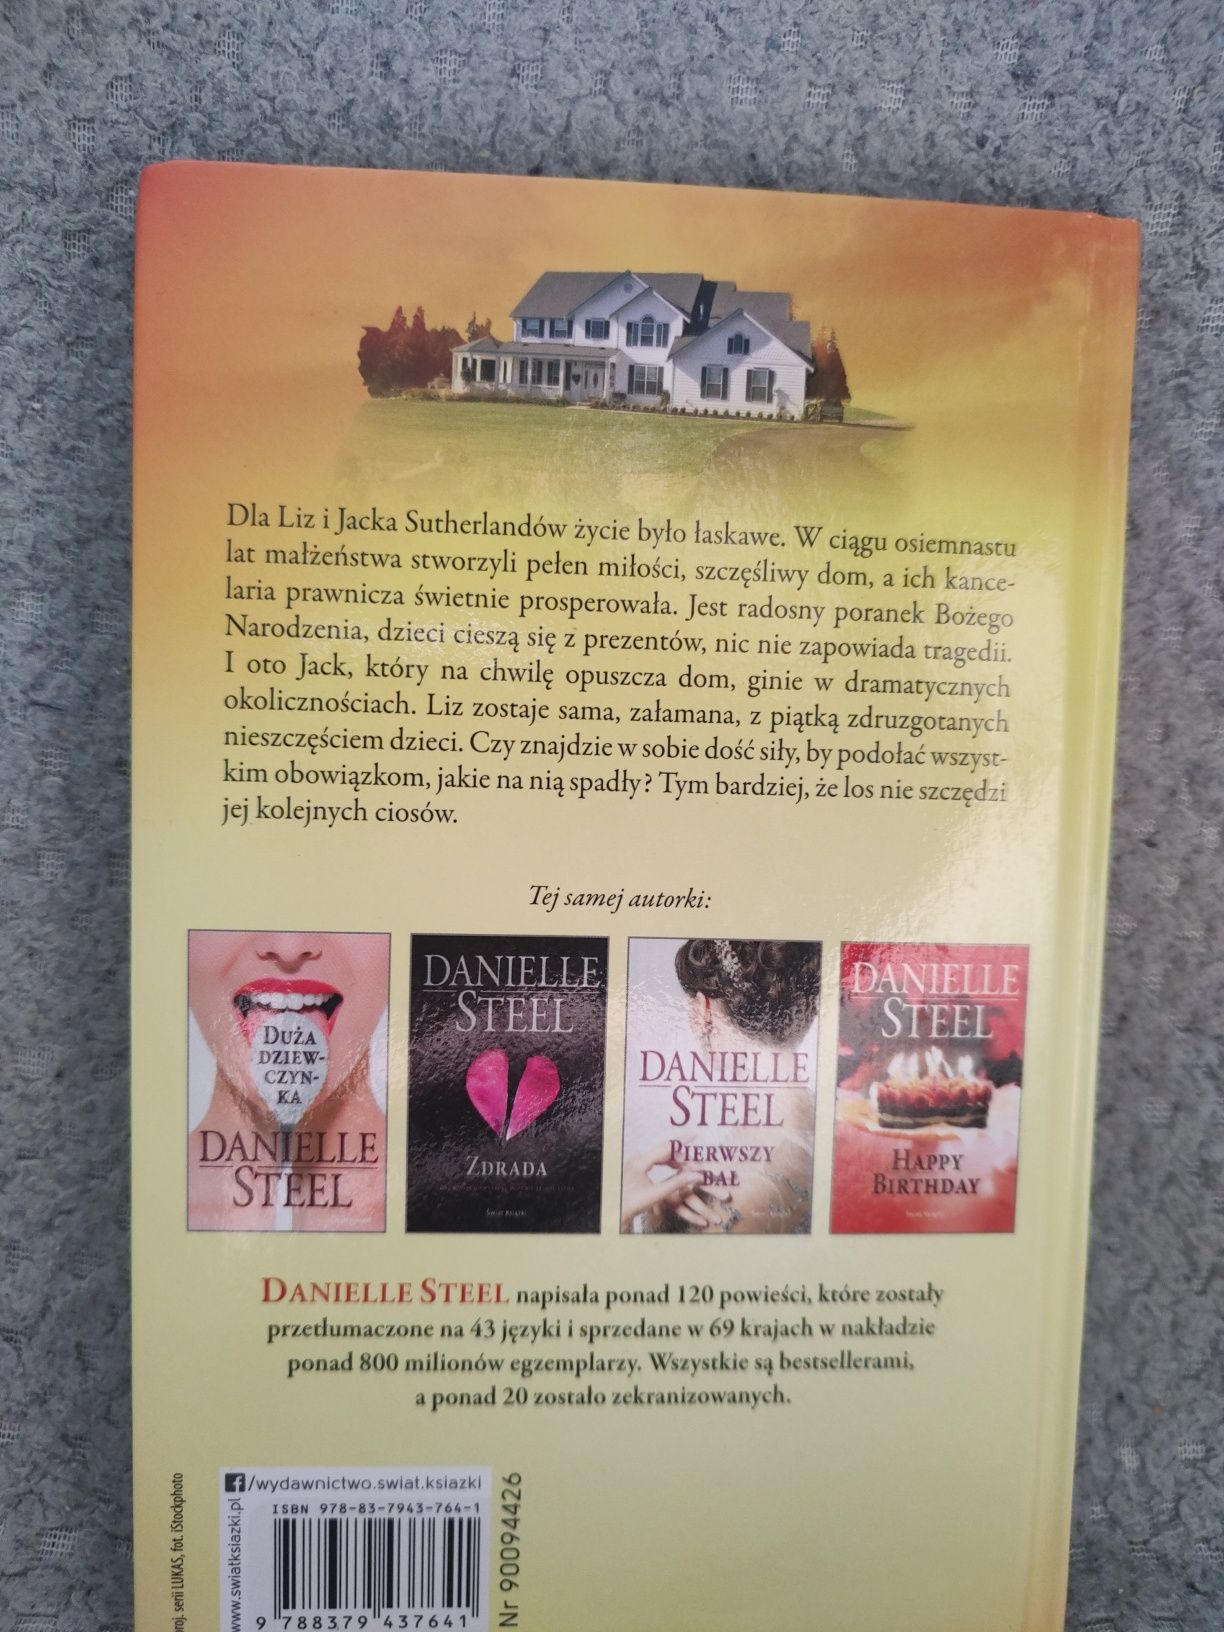 Książka Danielle Steel "Dom przy Hope Street"